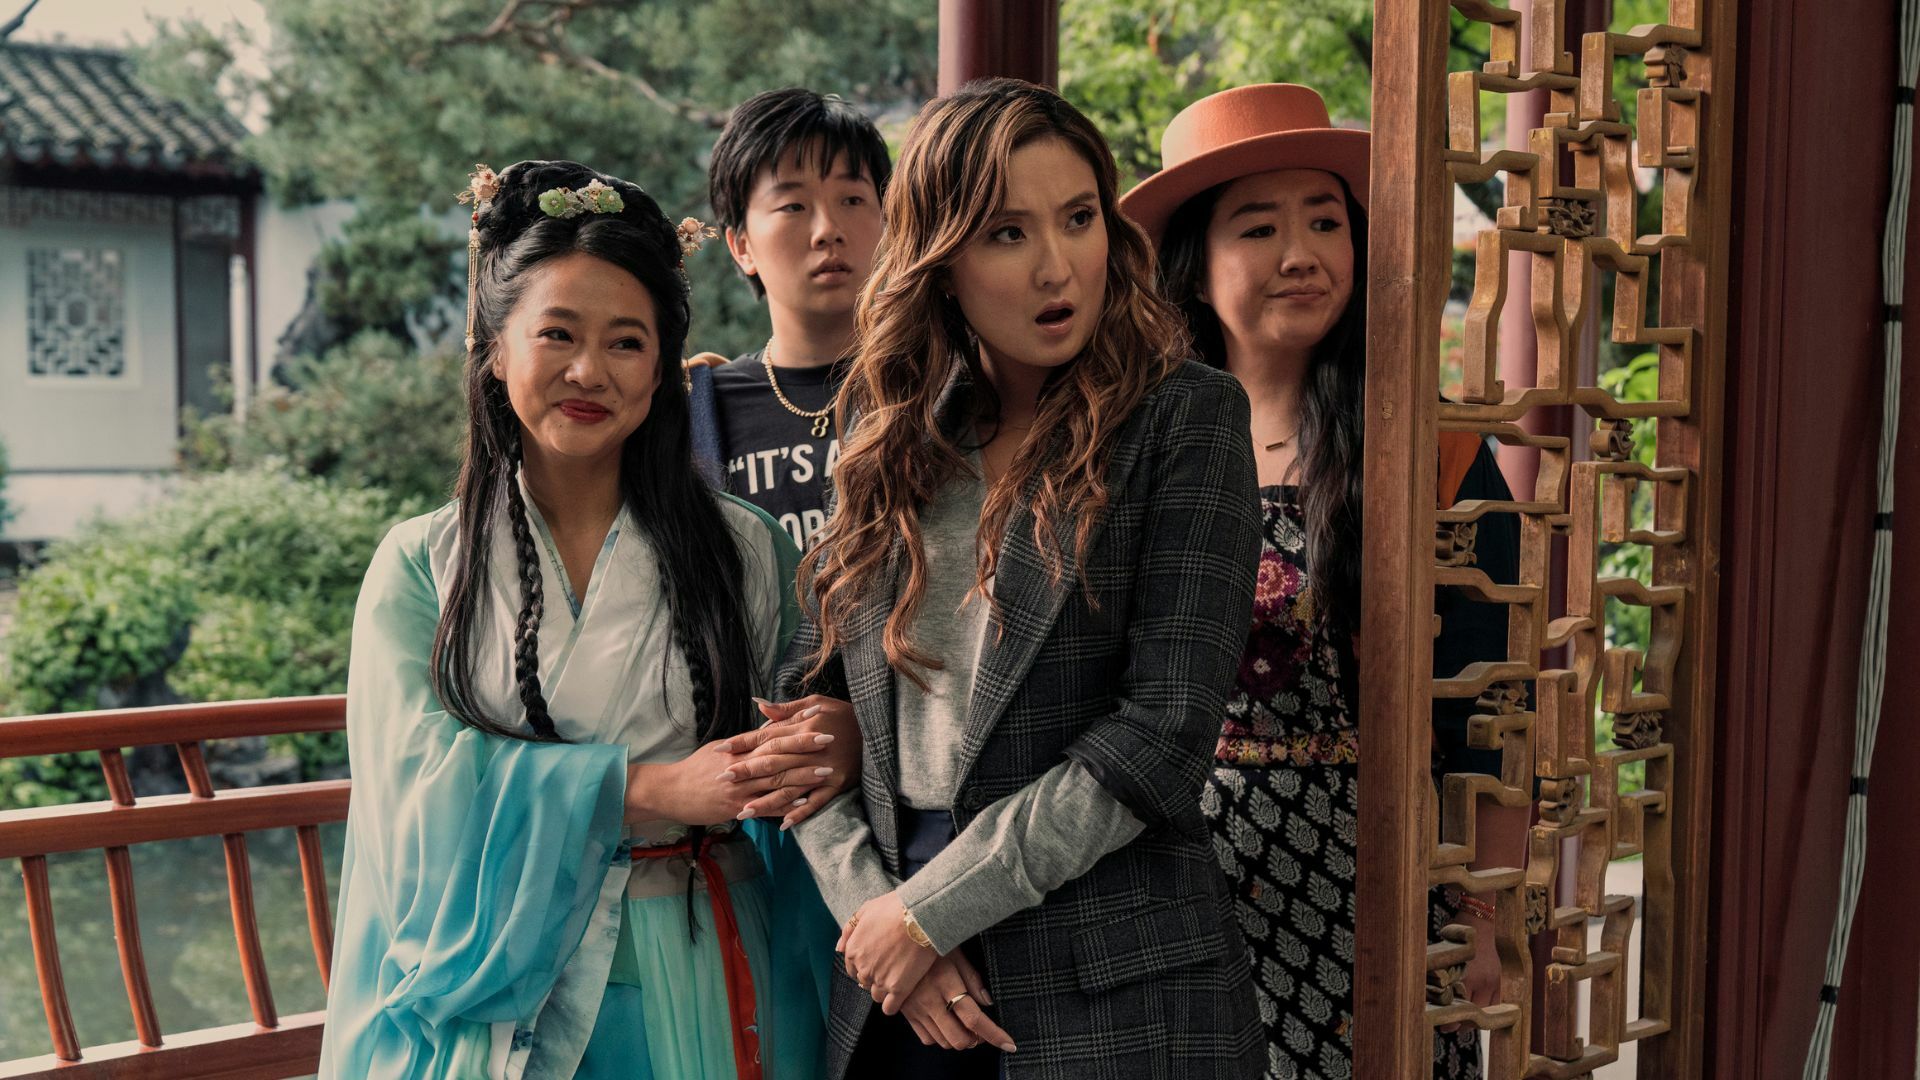 Stephanie Hsu, Sabrina Wu, Ashley Park, and Sherry Cola star as four friends in 